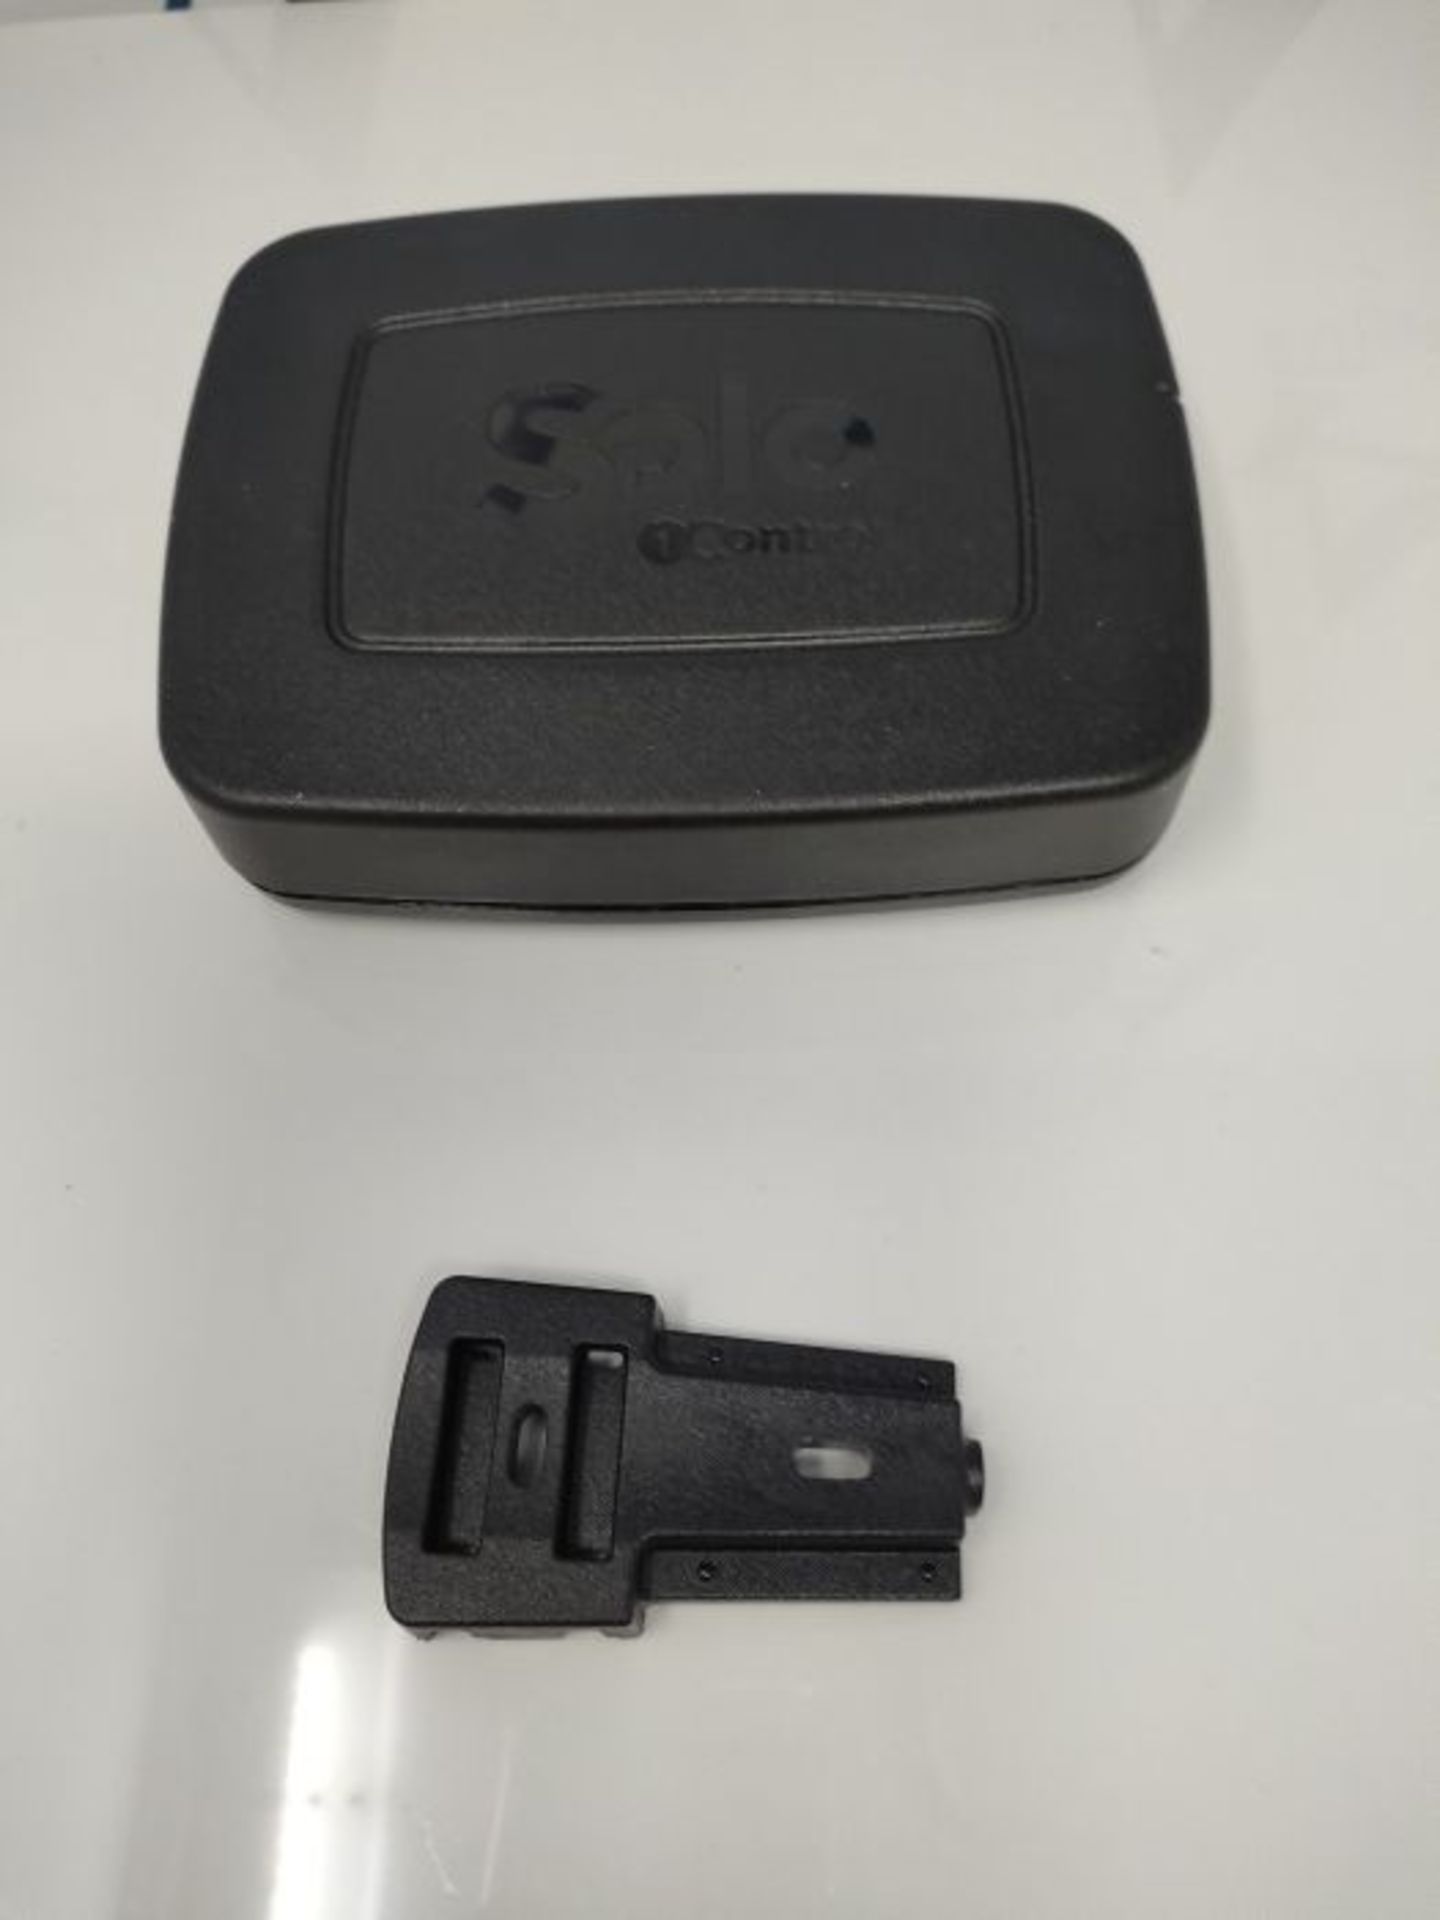 1CONTROL SOLOMINI Travel Adapter, 21 cm, Black - Image 3 of 3